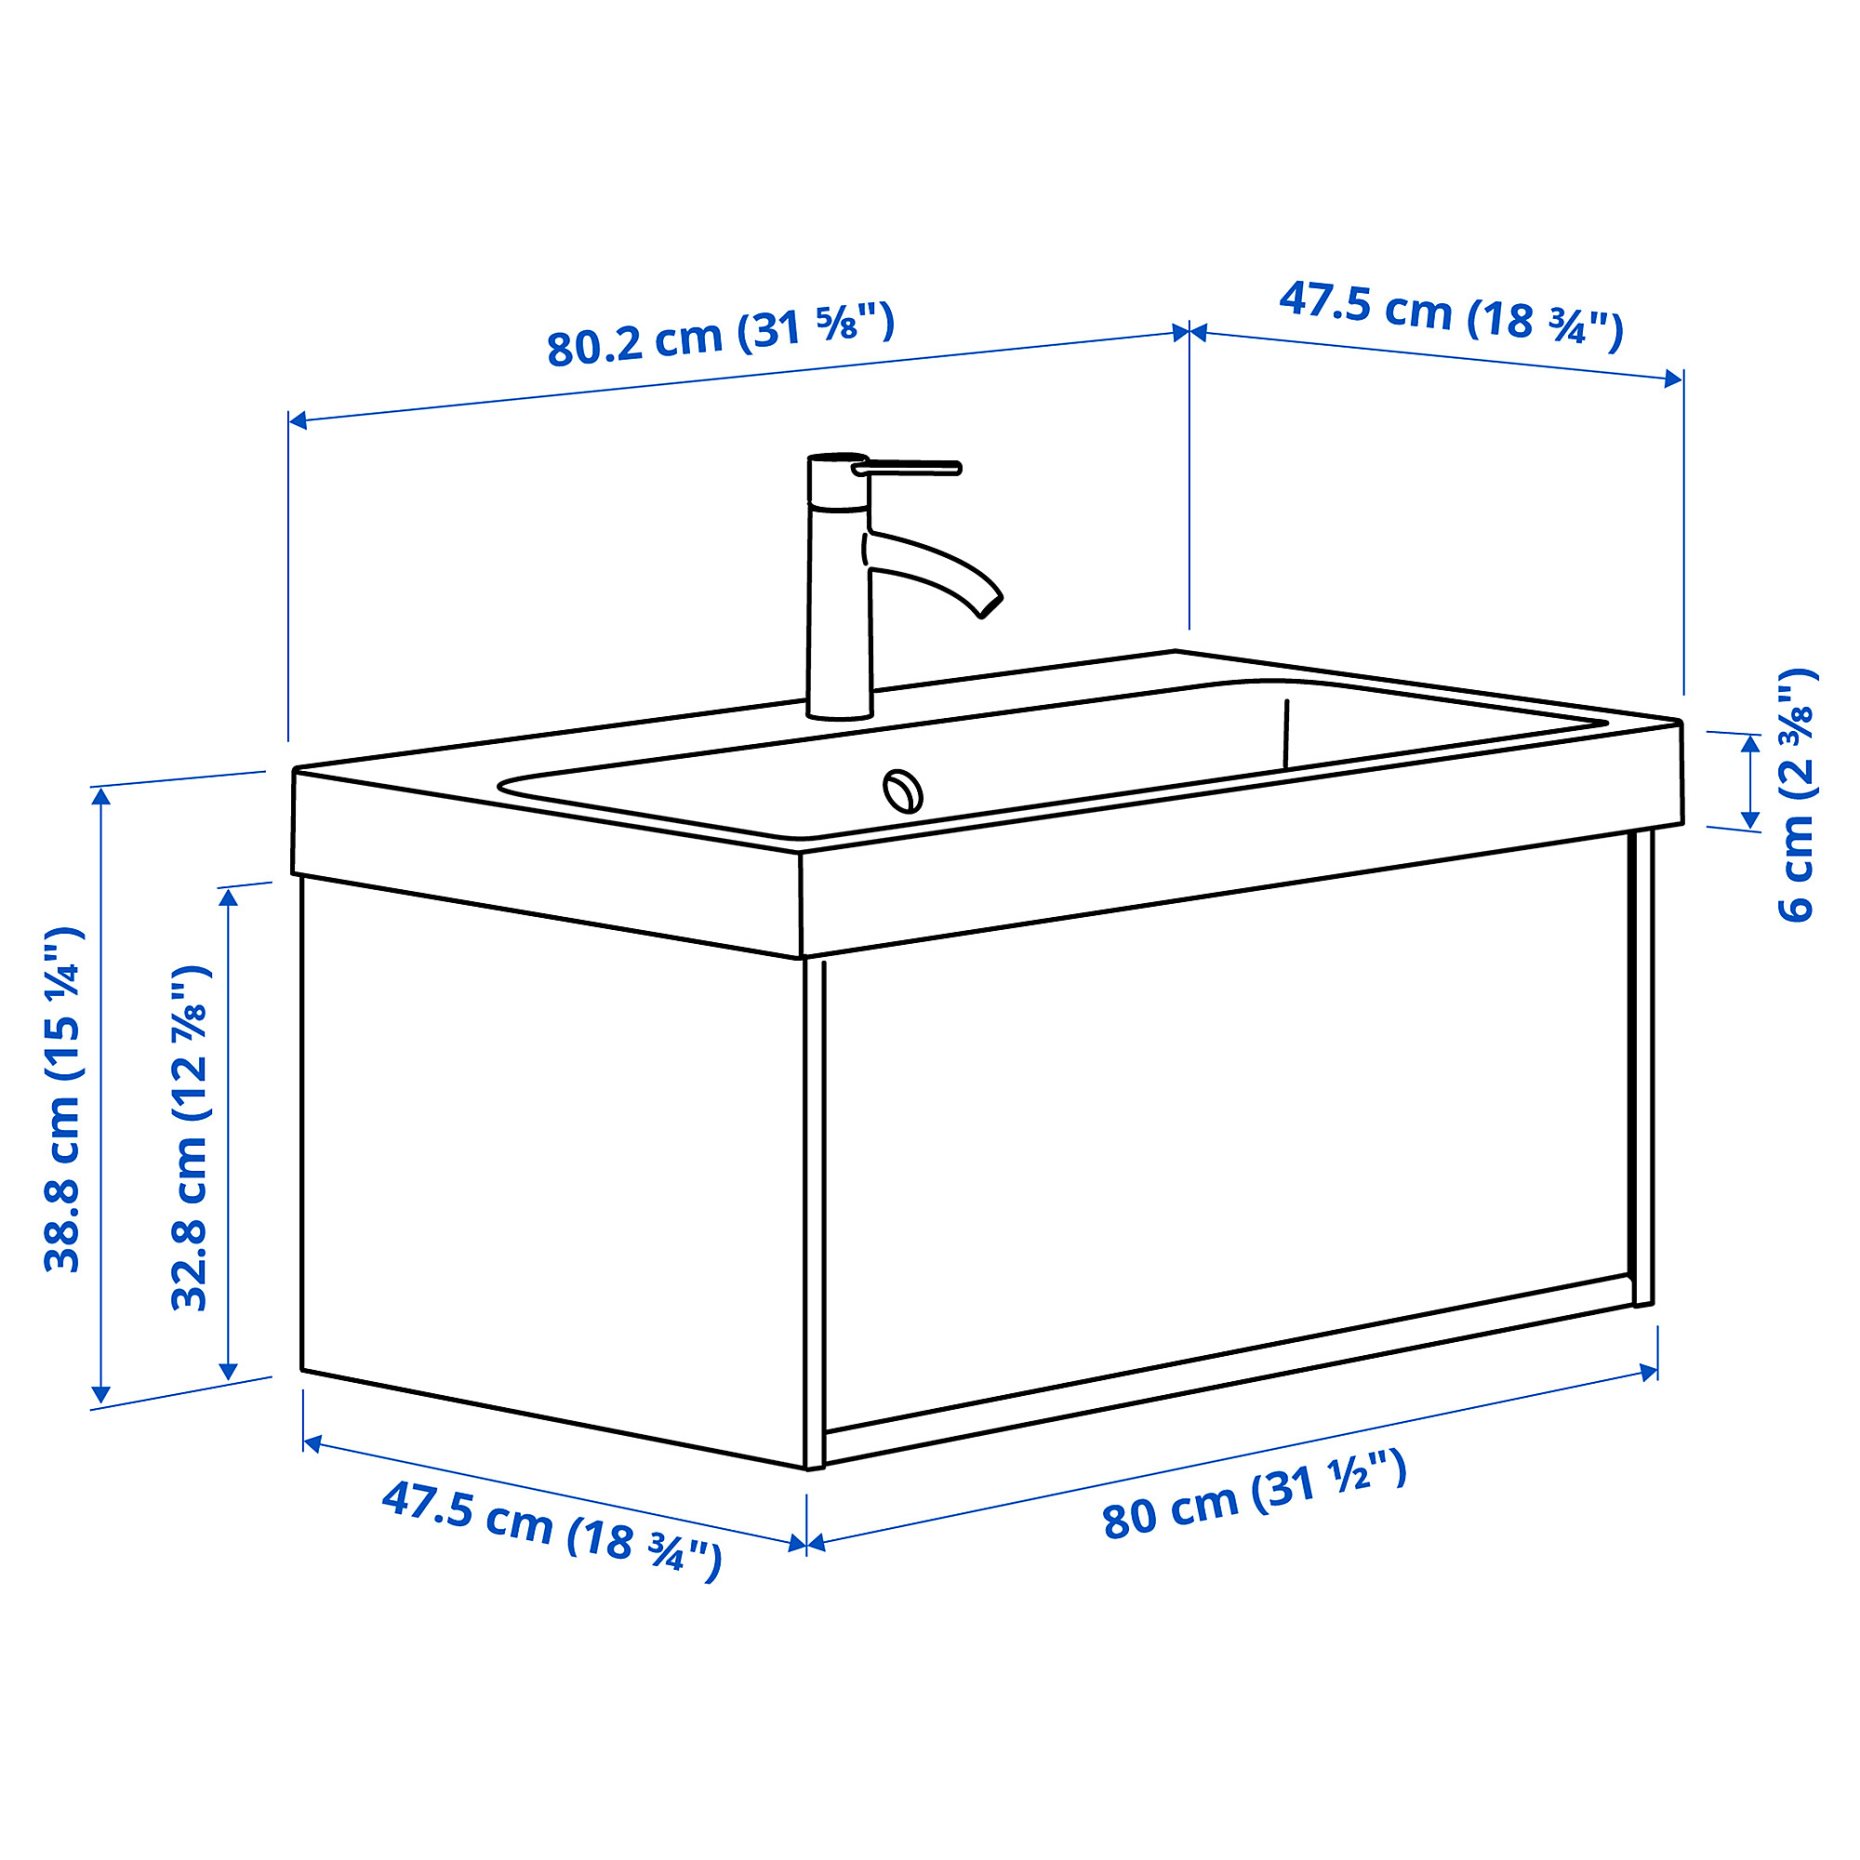 ANGSJON/BACKSJON, wash-stand with drawer/wash-basin/tap, 80x48x39 cm, 695.212.34